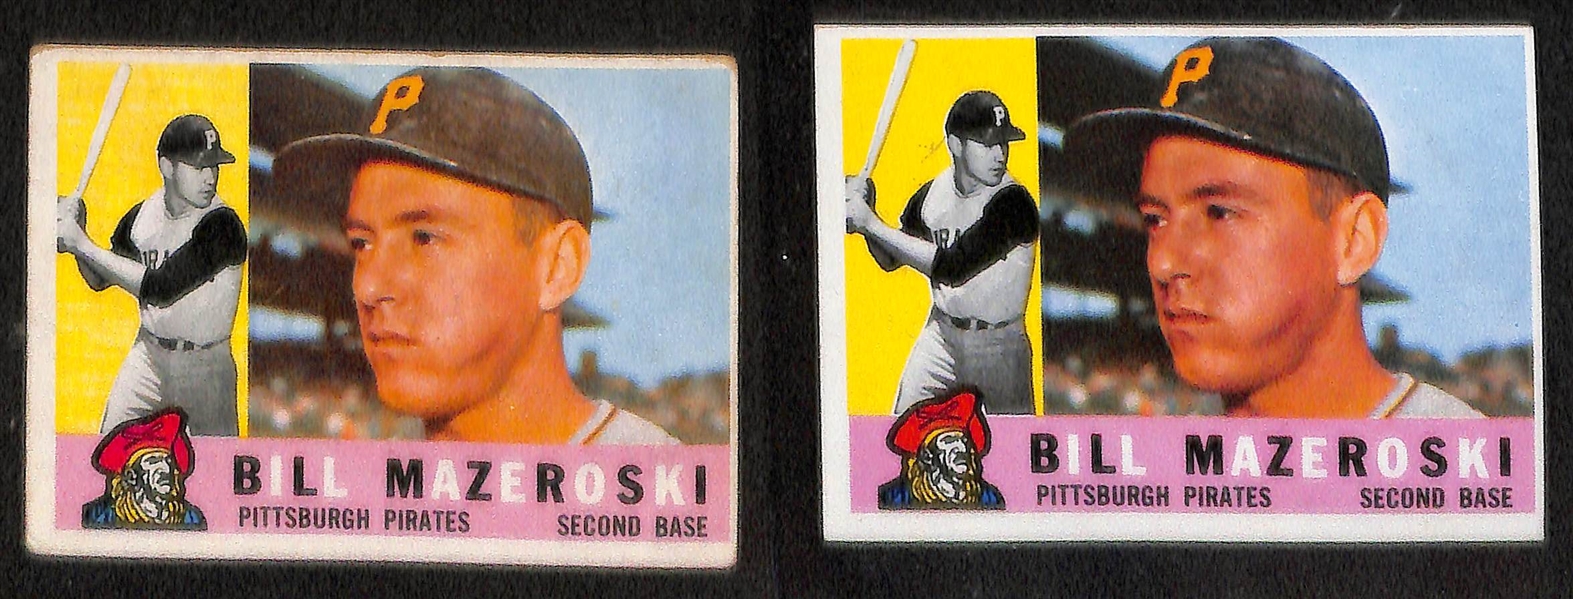 Lot of 260 - 1960 Topps Baseball Cards w. Frank Robinson